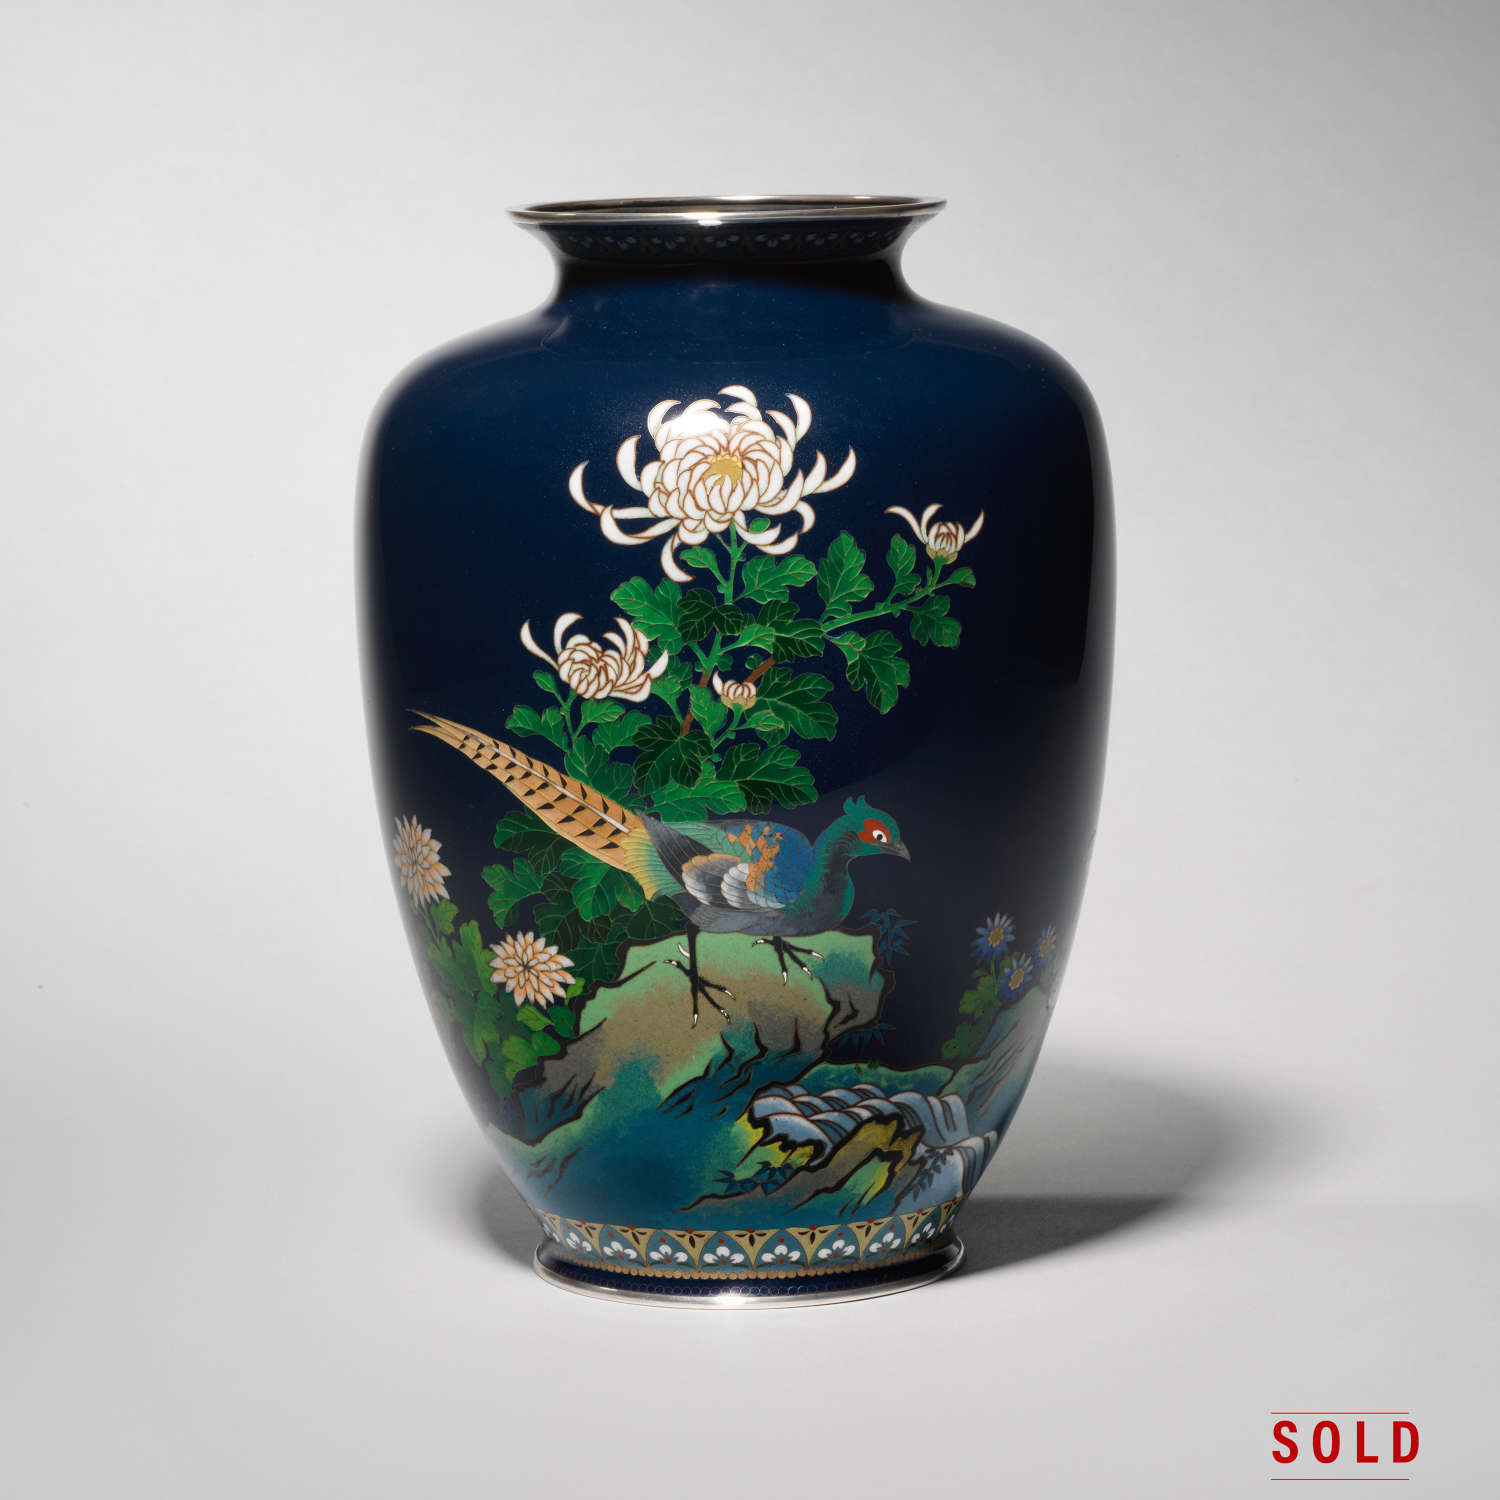 Japanese cloisonné enamel vase by Ando Jubei Taishō period